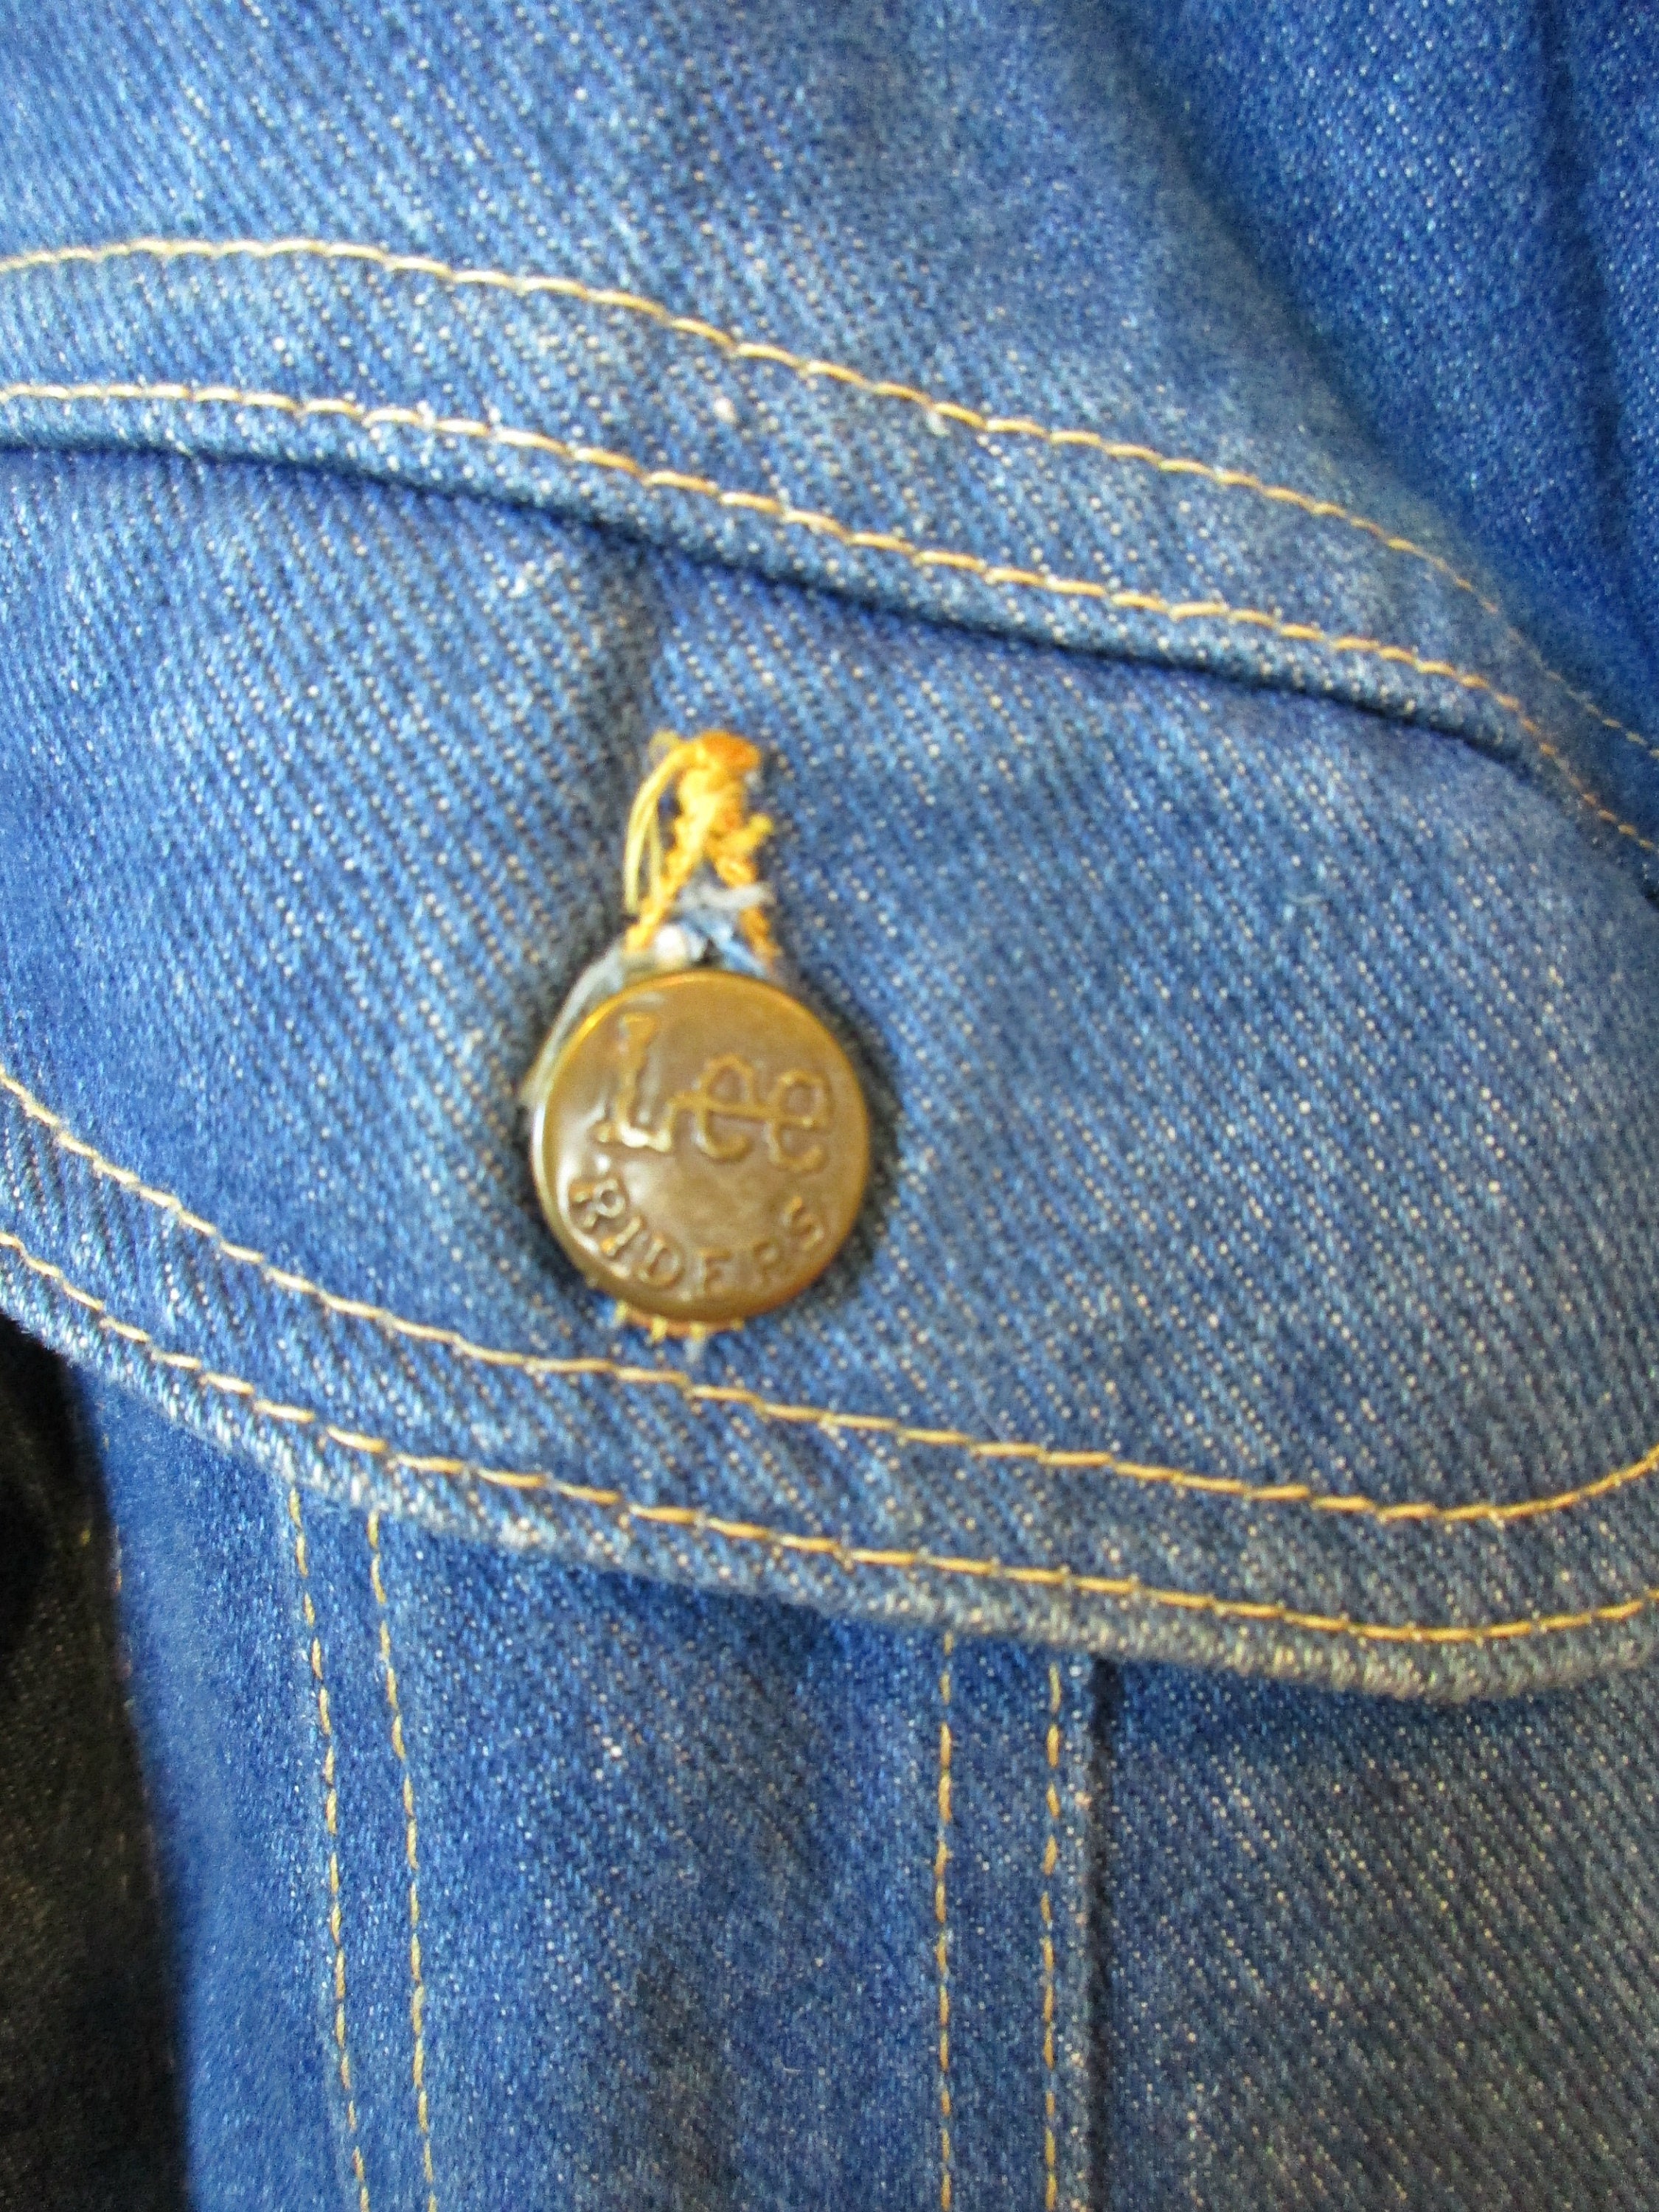 Vintage Denim Jean Jacket by Lee M.R. 1970s Blue Cotton 40 L / - Etsy